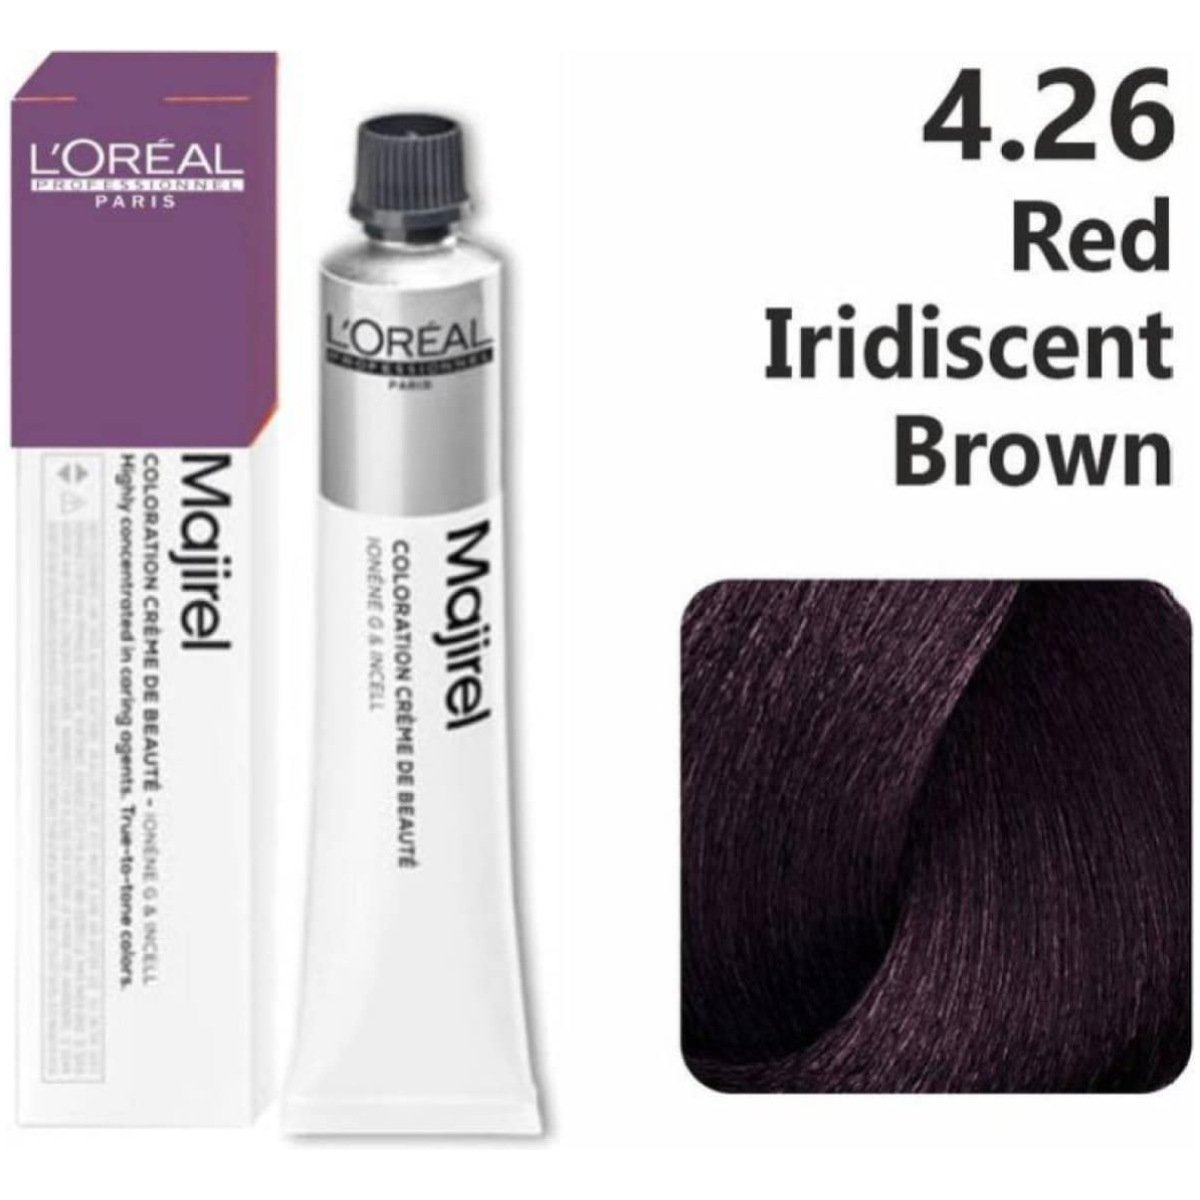 L’Oreal Majirel Hair Color 50G 4.26 Red Iridescent Brown + Oxidant 1000Ml Combo